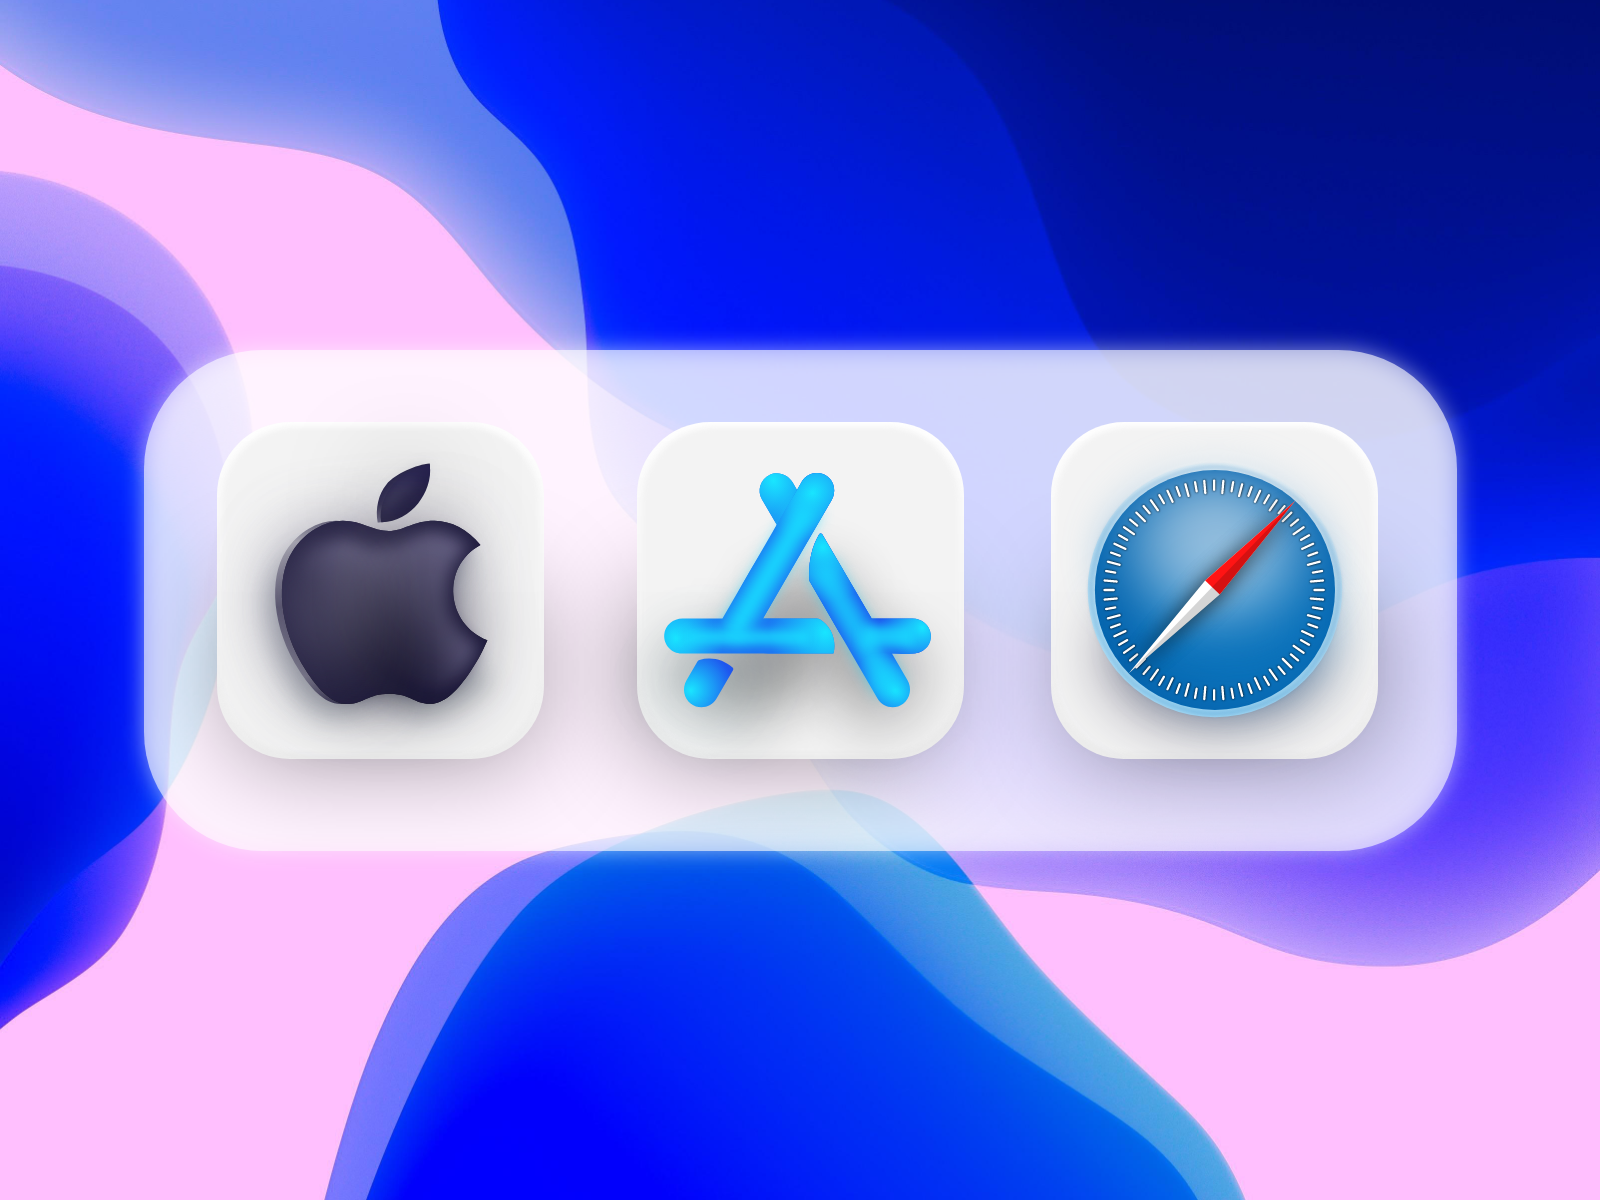 Айфон 14 значки. Иконка IOS. Иконки в стиле Apple. Иконки иос 14. Иконки приложений Apple.